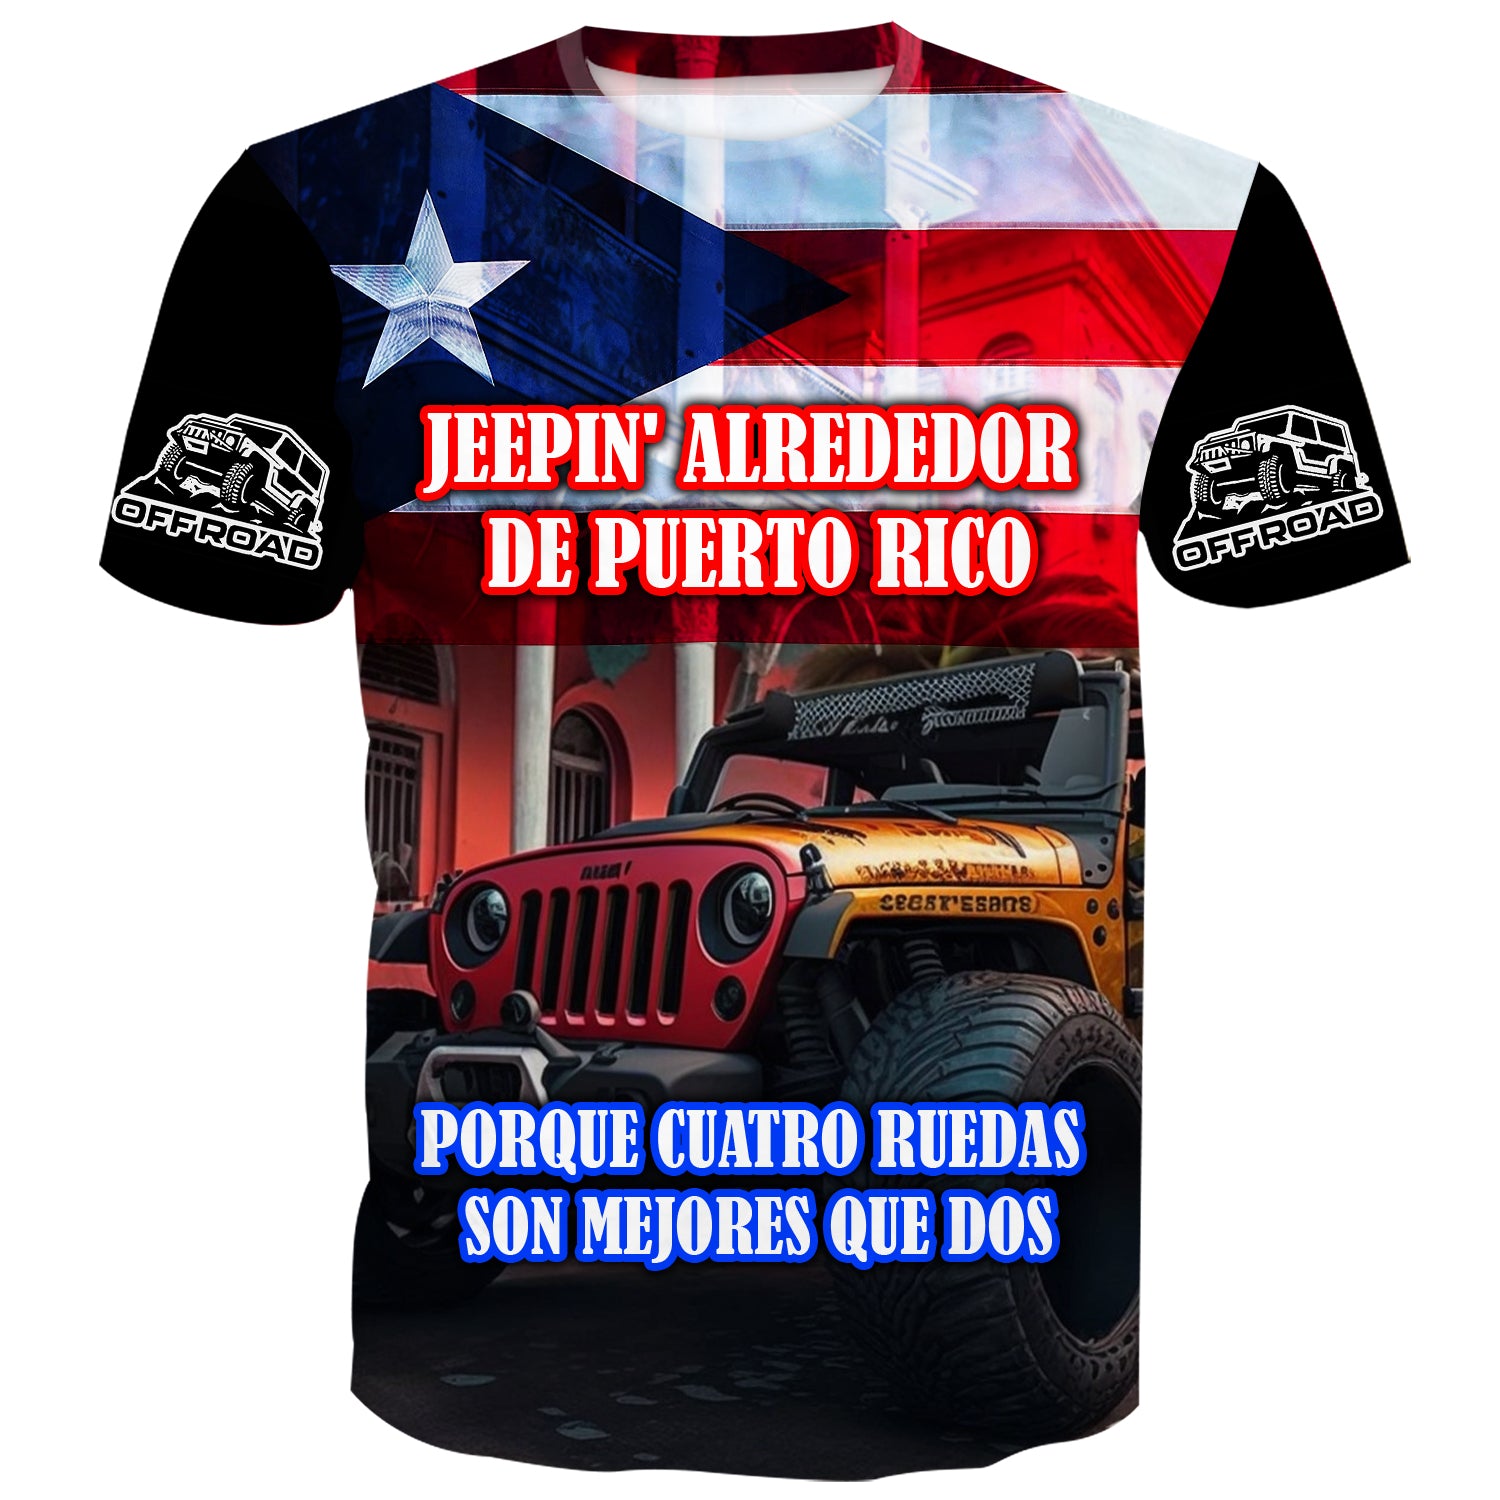 Jeepin' around Puerto Rico - T-Shirt